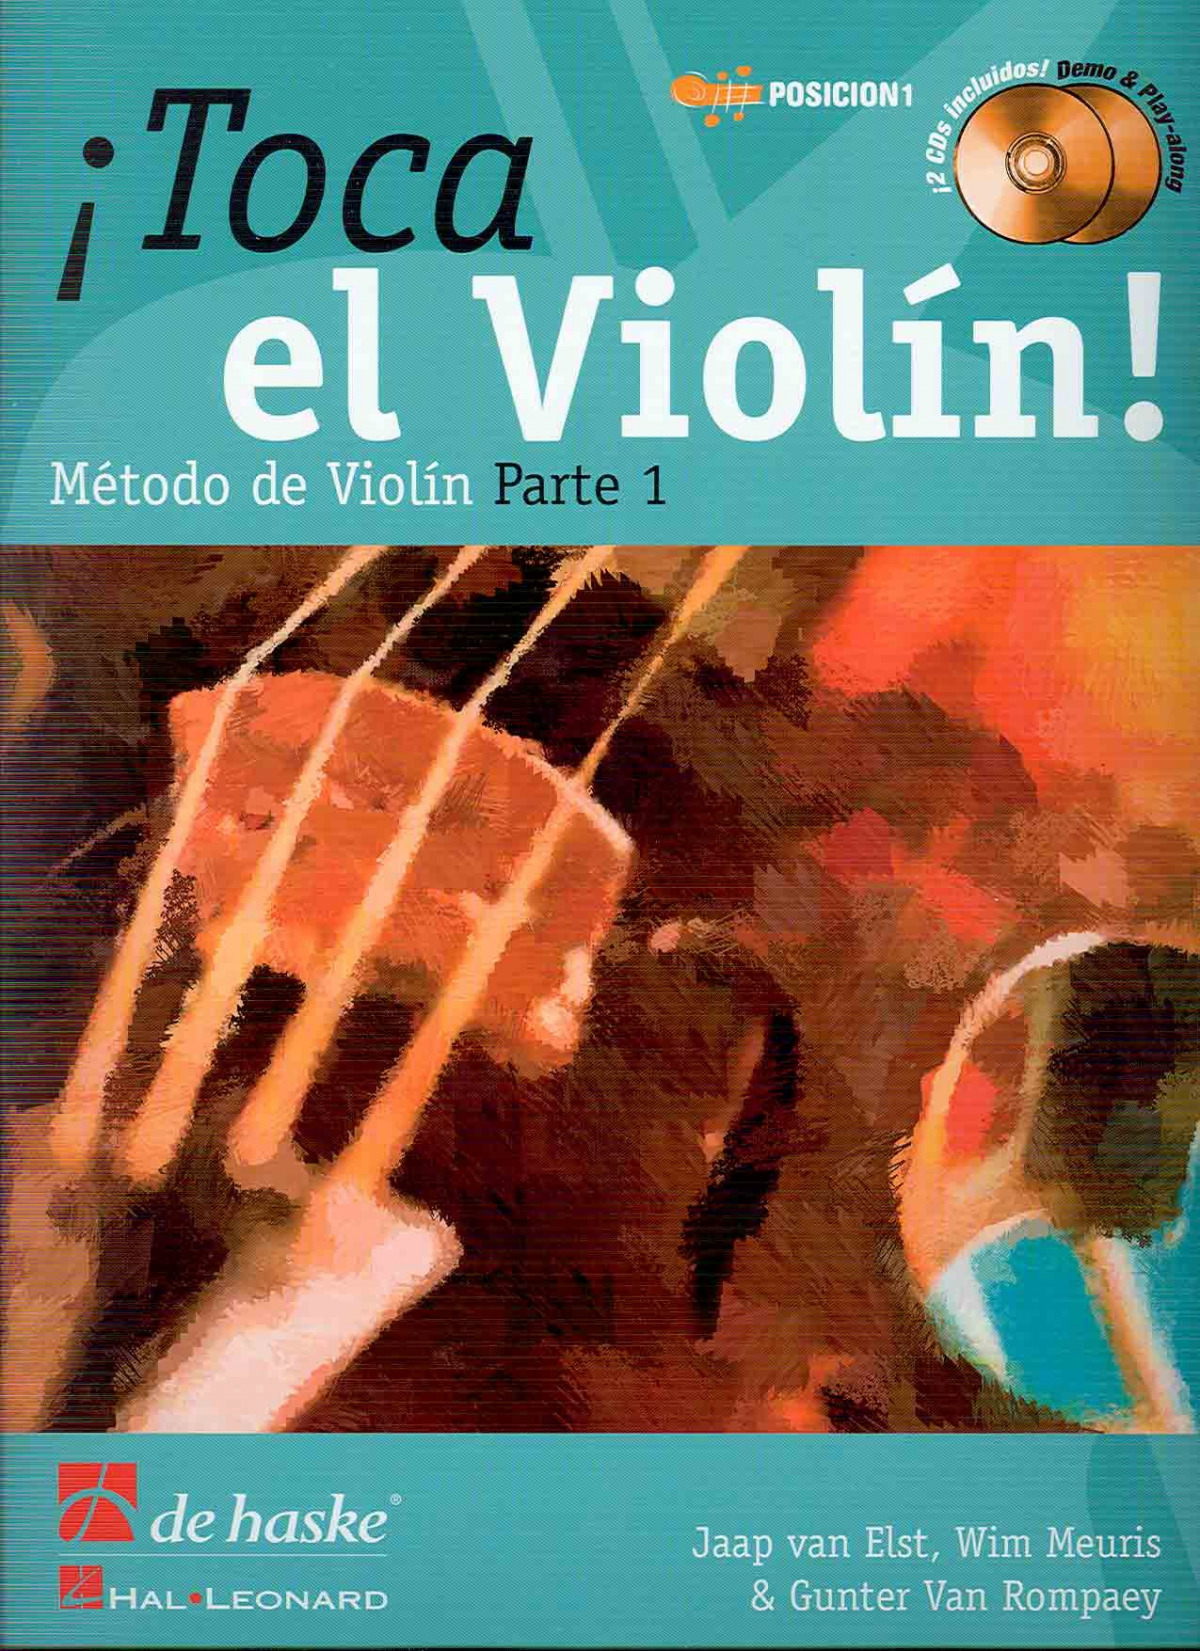 ¡toca el violin! - Van Rompaey, Gunter